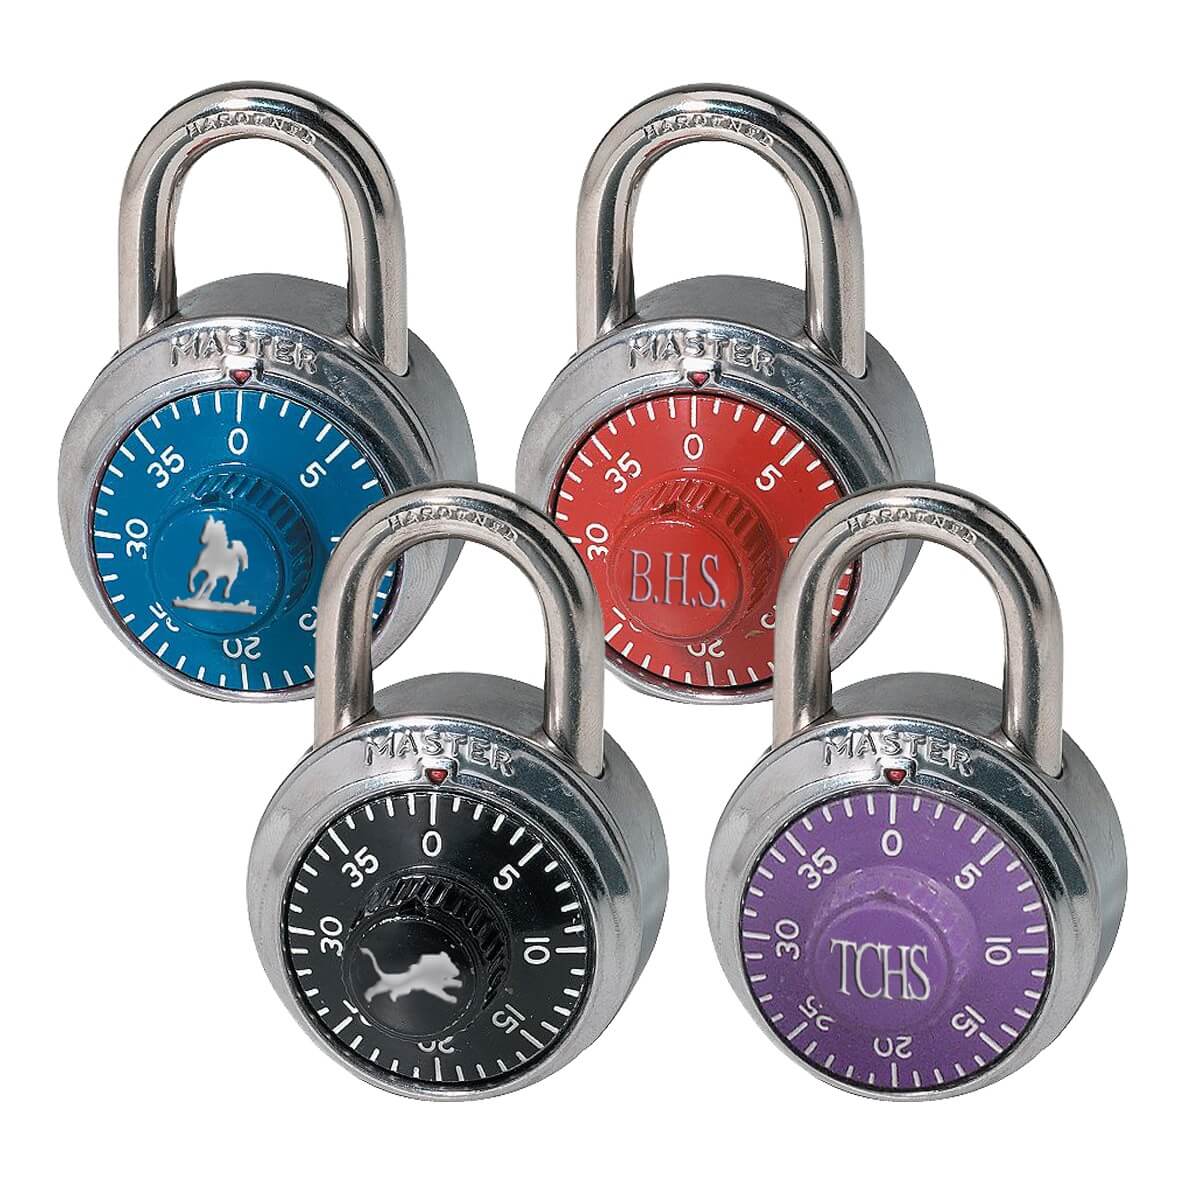 Master Lock Padlock 1525 1585 2010 2076 Control Key OEM Original Master Key V615 